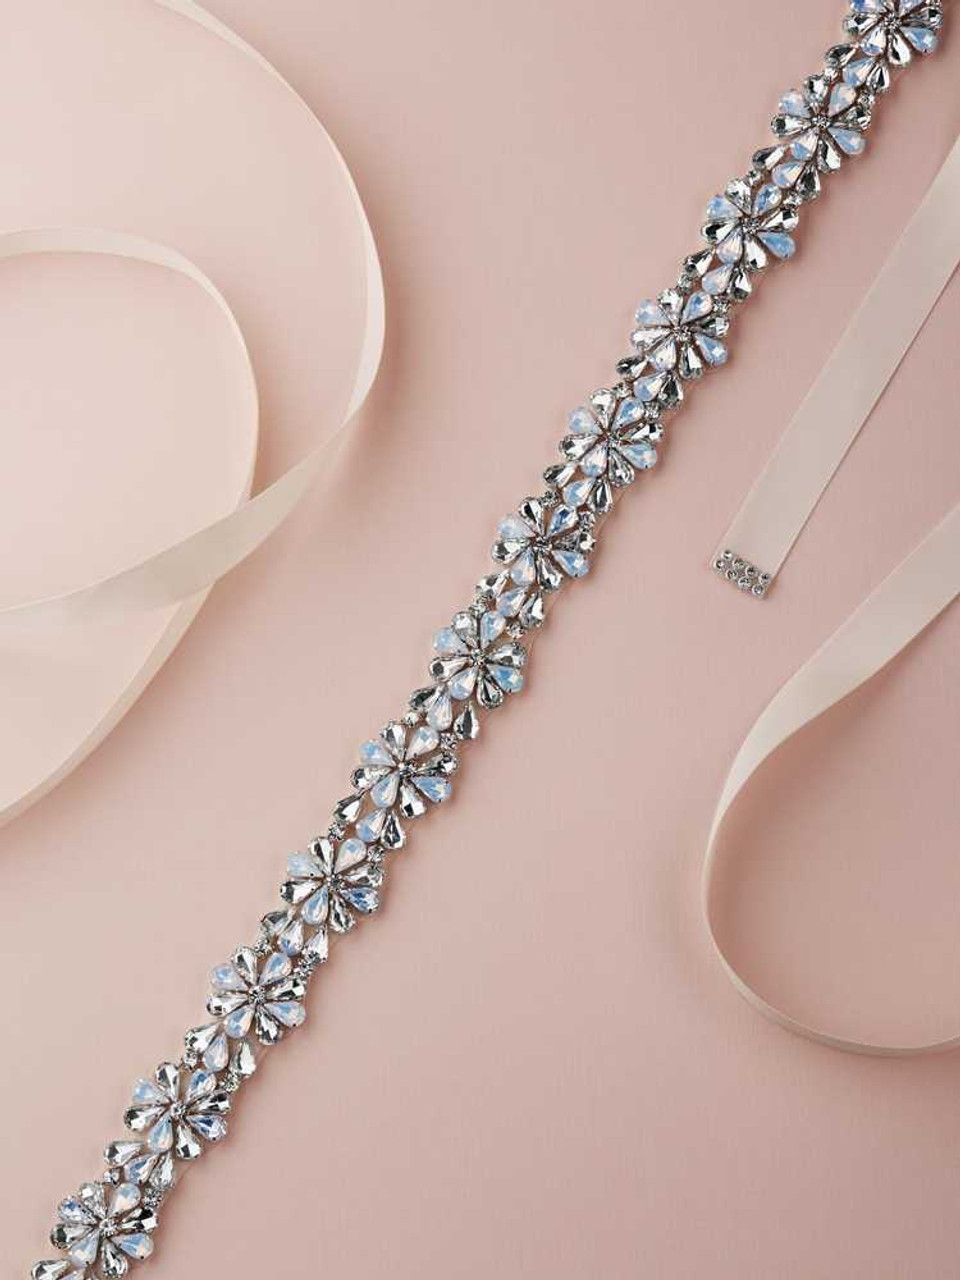 Vintage Design Rhinestone Wedding Dress Belt Clear Crystal Bridal Sashes  Belts